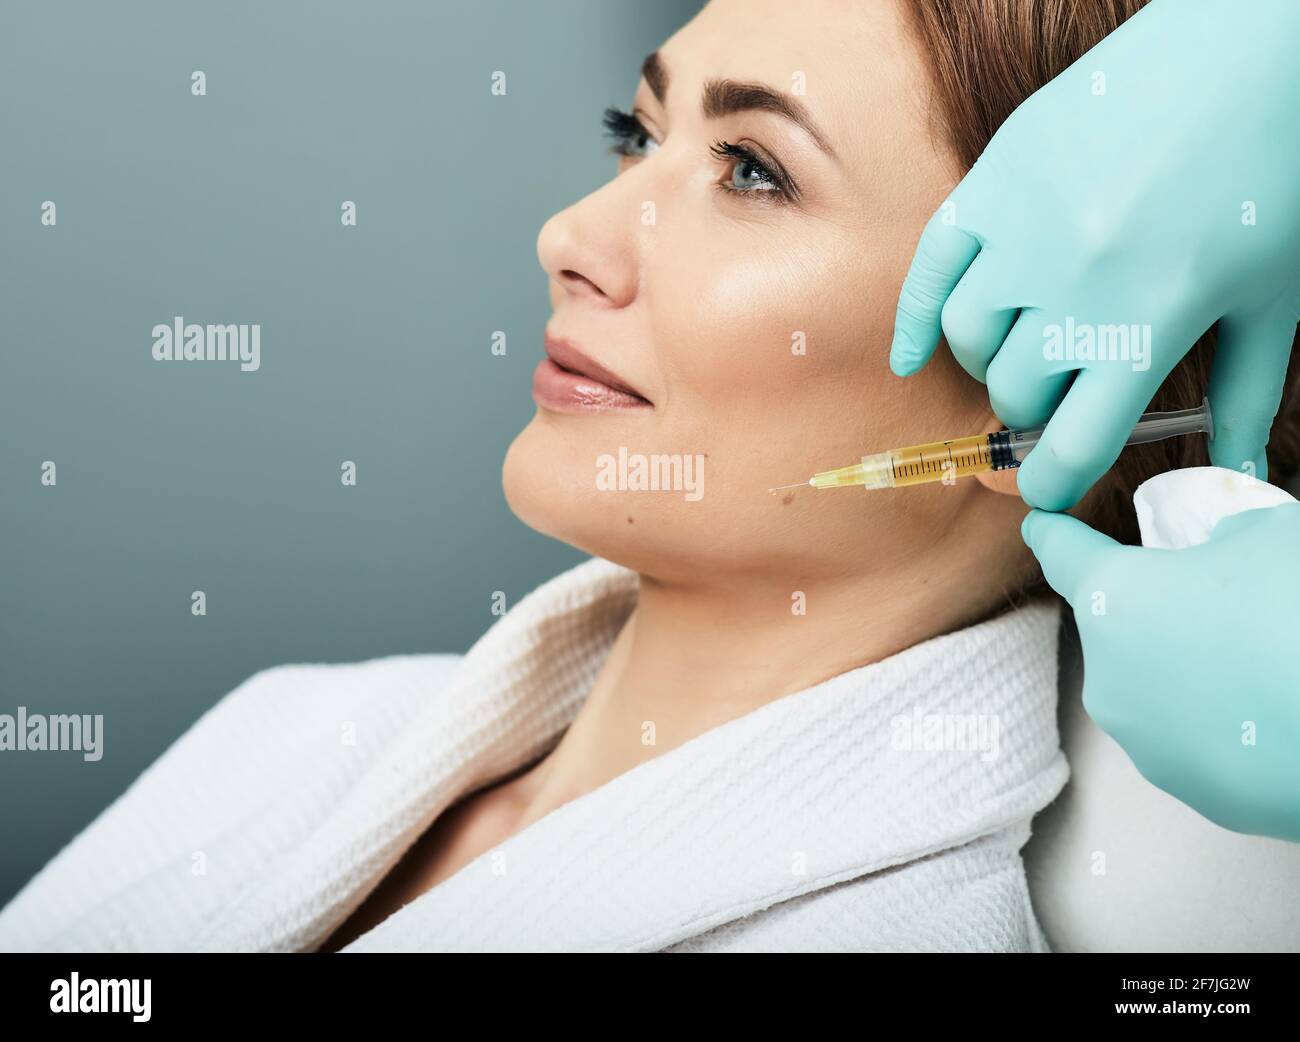 Plasmolifting injection, plasma therapy. Cosmetology procedure for woman's face skin using blood plasma Stock Photo